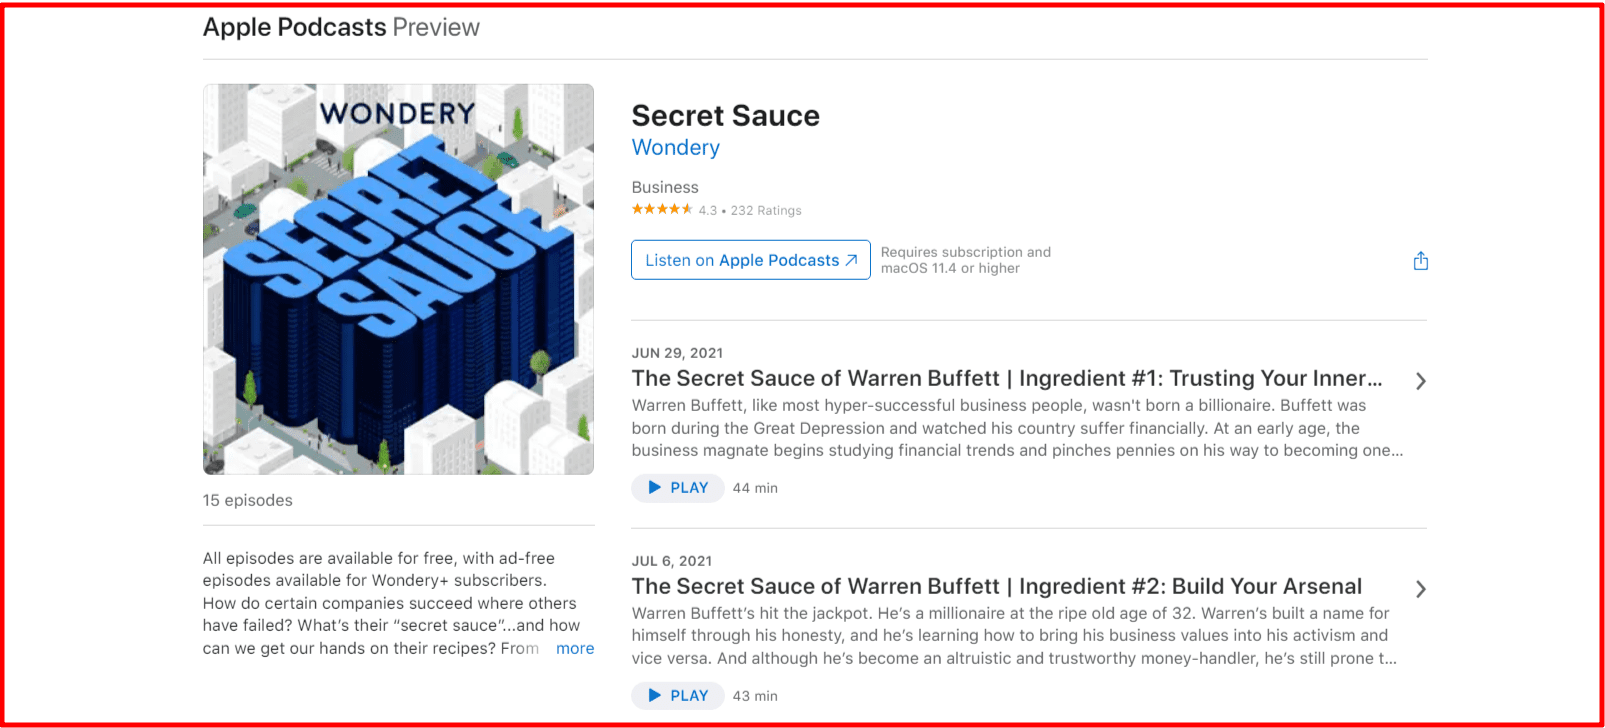 Secret Sauce on Apple Podcasts